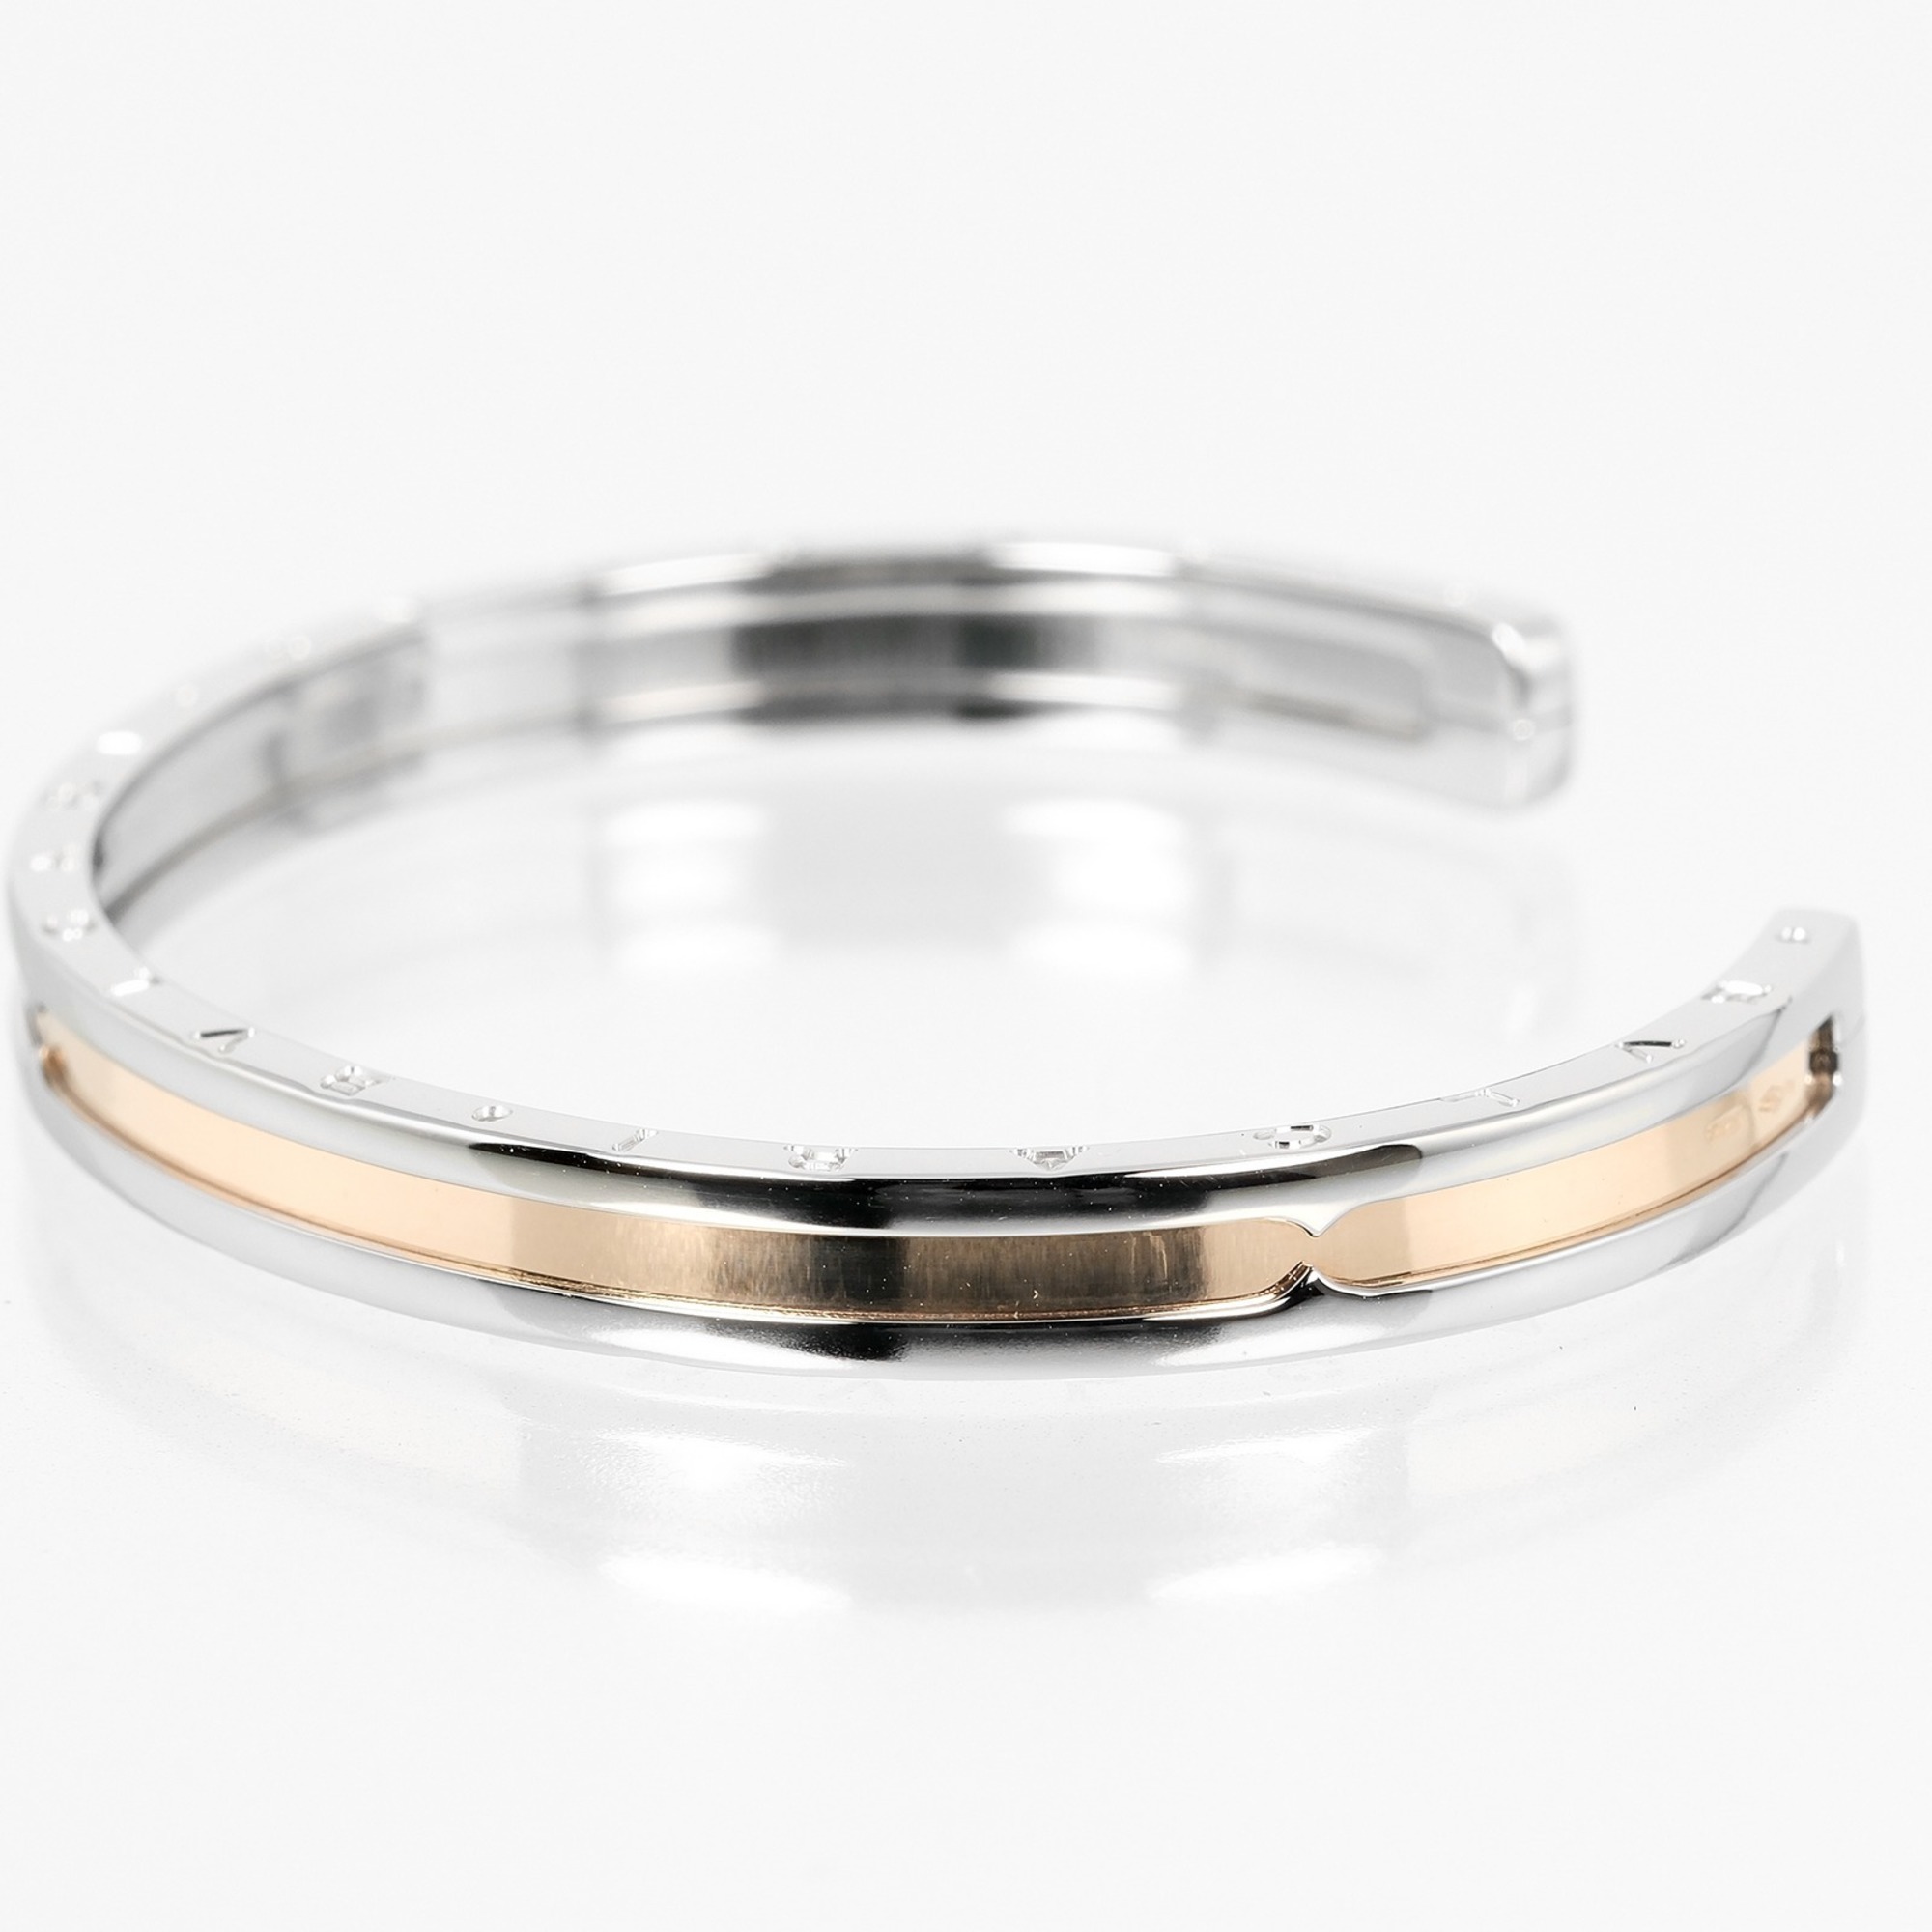 BVLGARI B.zero1 SM Bracelet, wrist size 15.5cm, K18PG, pink gold, stainless steel, approx. 12.35g